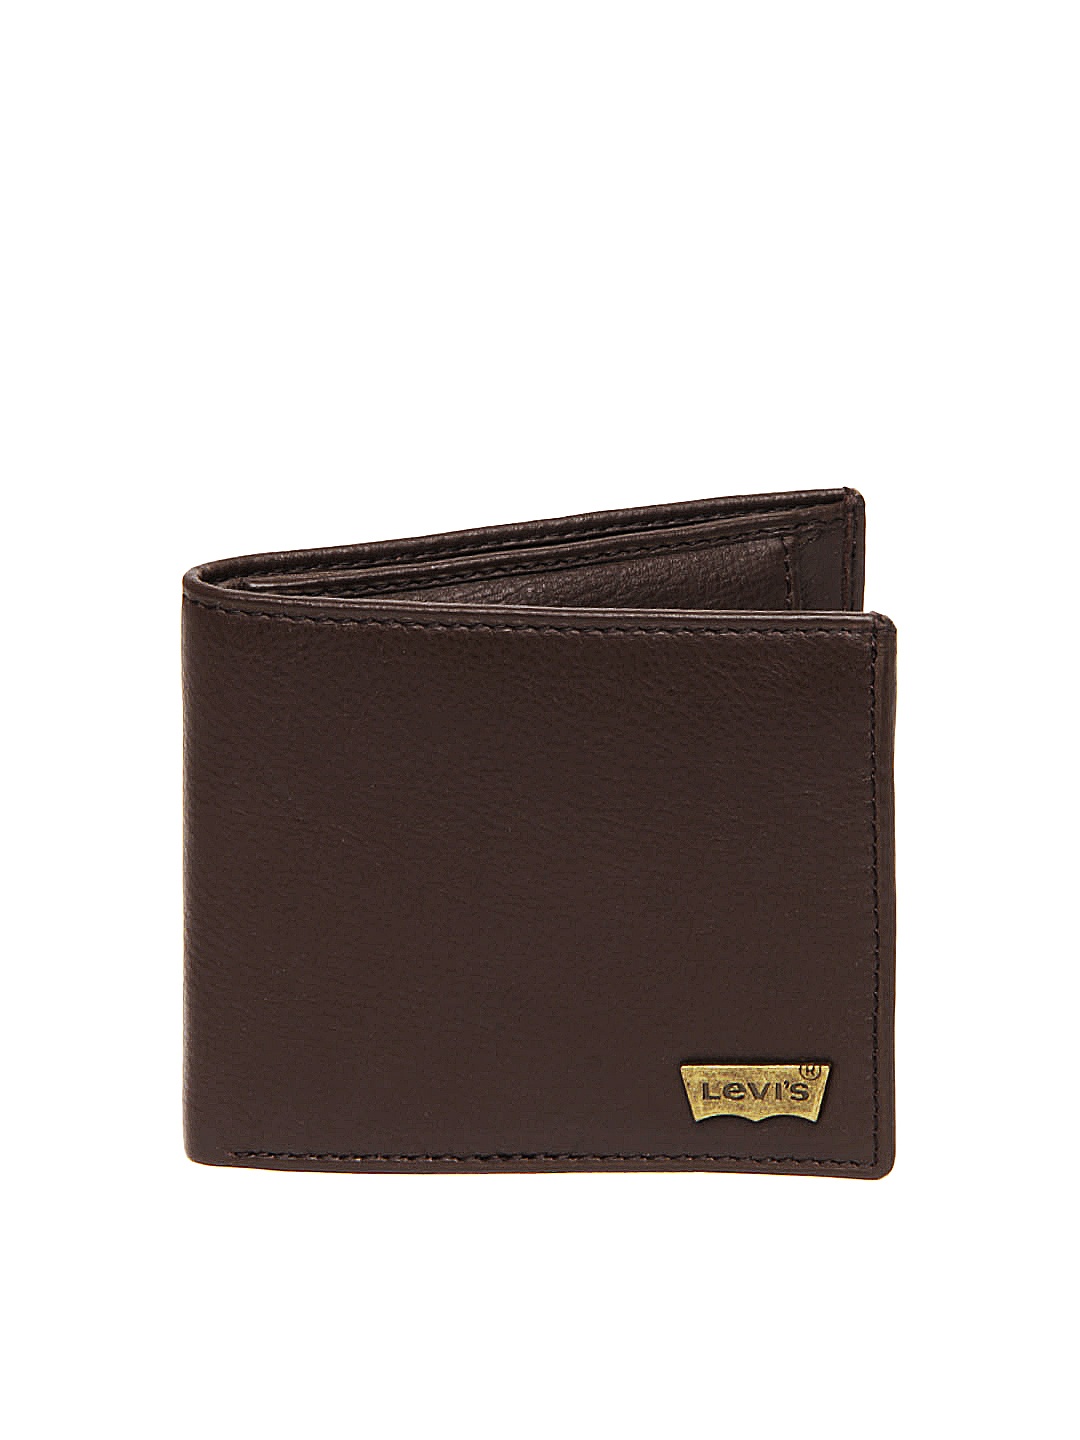 Myntra Levis Men Brown Leather Wallet 267362 | Buy Myntra Levis Wallets at best price online ...